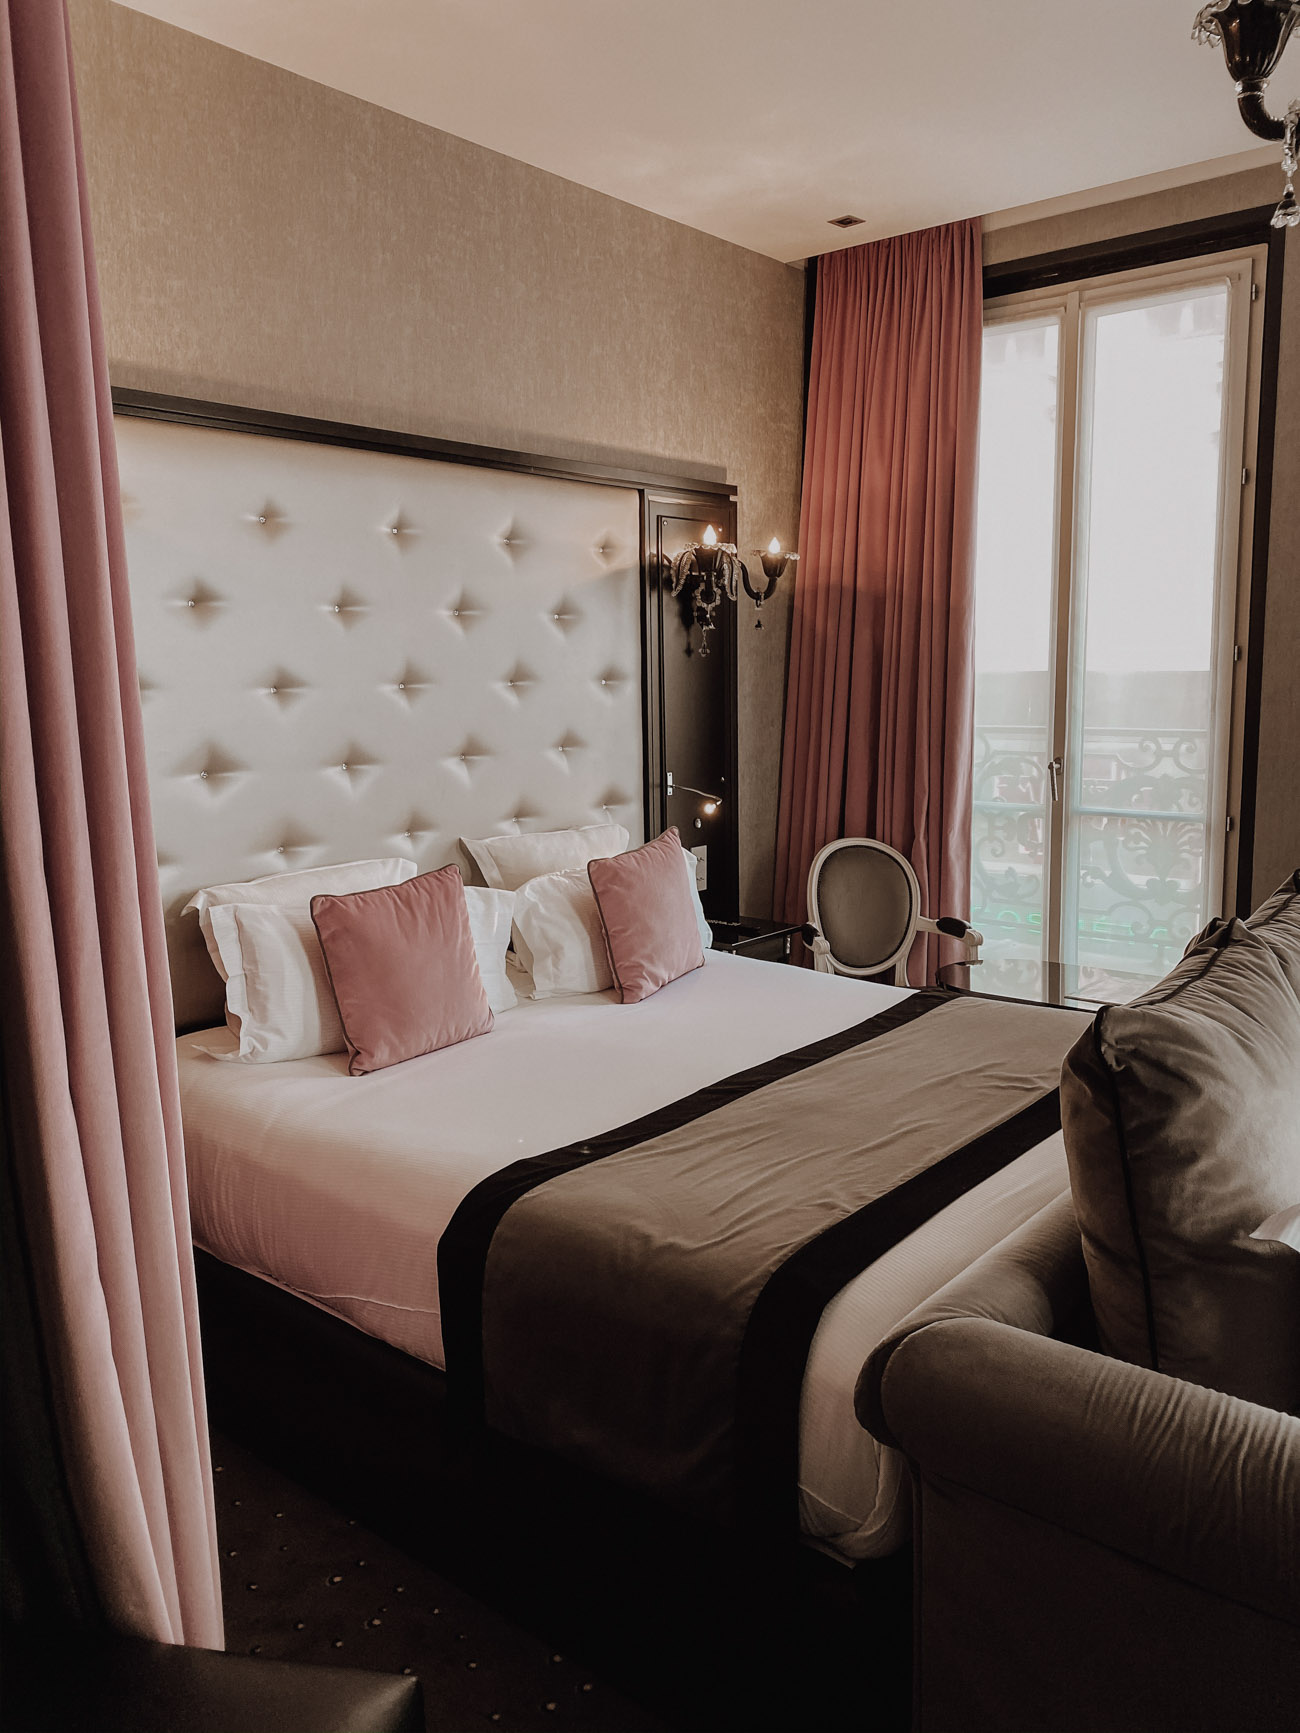 Paris Hotel | Maison Albar Hotel Diamond | Where To Stay In Paris Blondie in the City by Hayley Larue